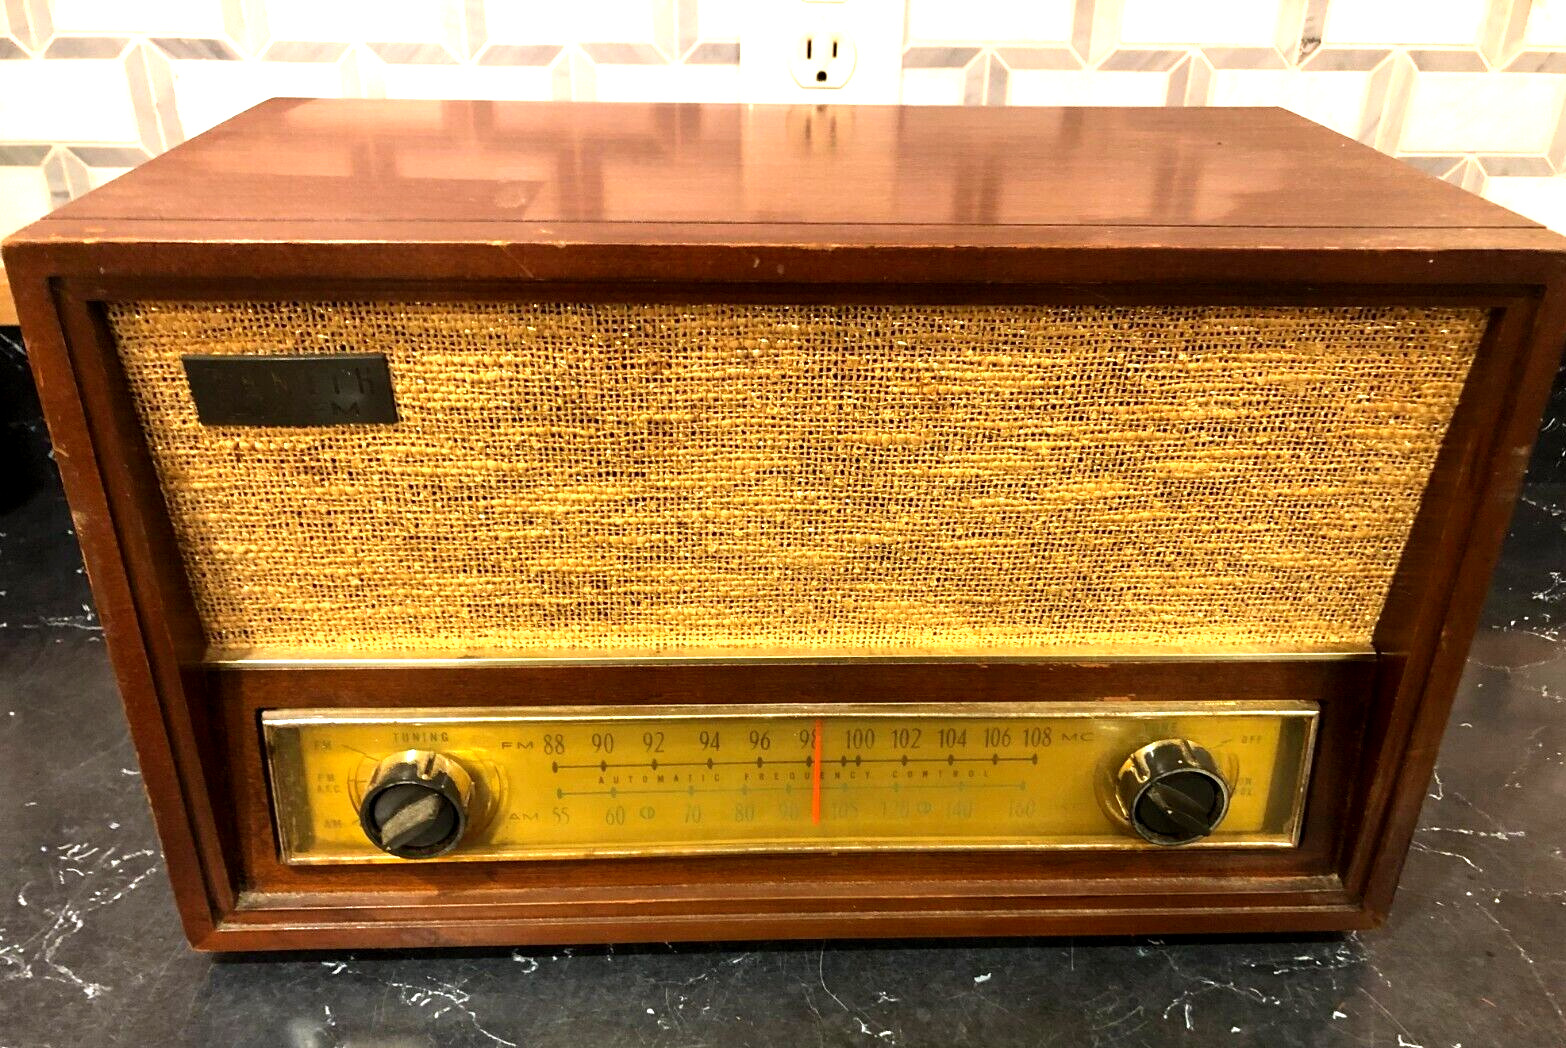 Zenith S-46210 1950s AM/FM Tube Radio With Phono Input